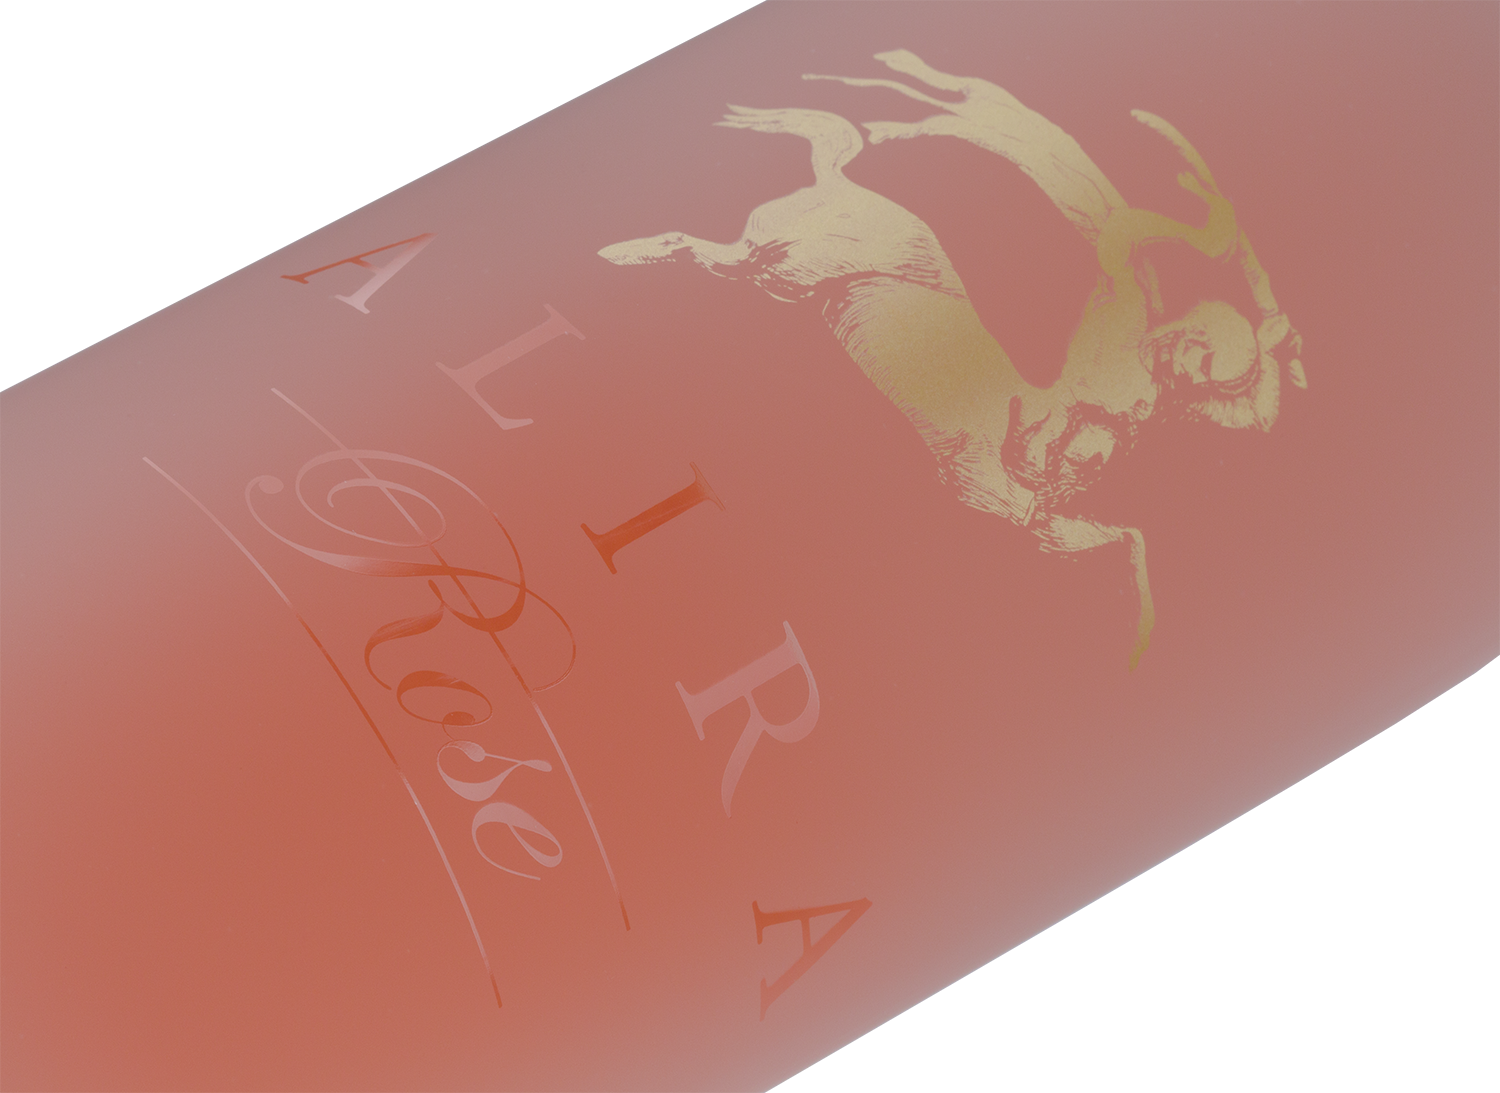 Poze Vin rose - Alira Magnum, 1.5 L, sec, 2017 | Alira